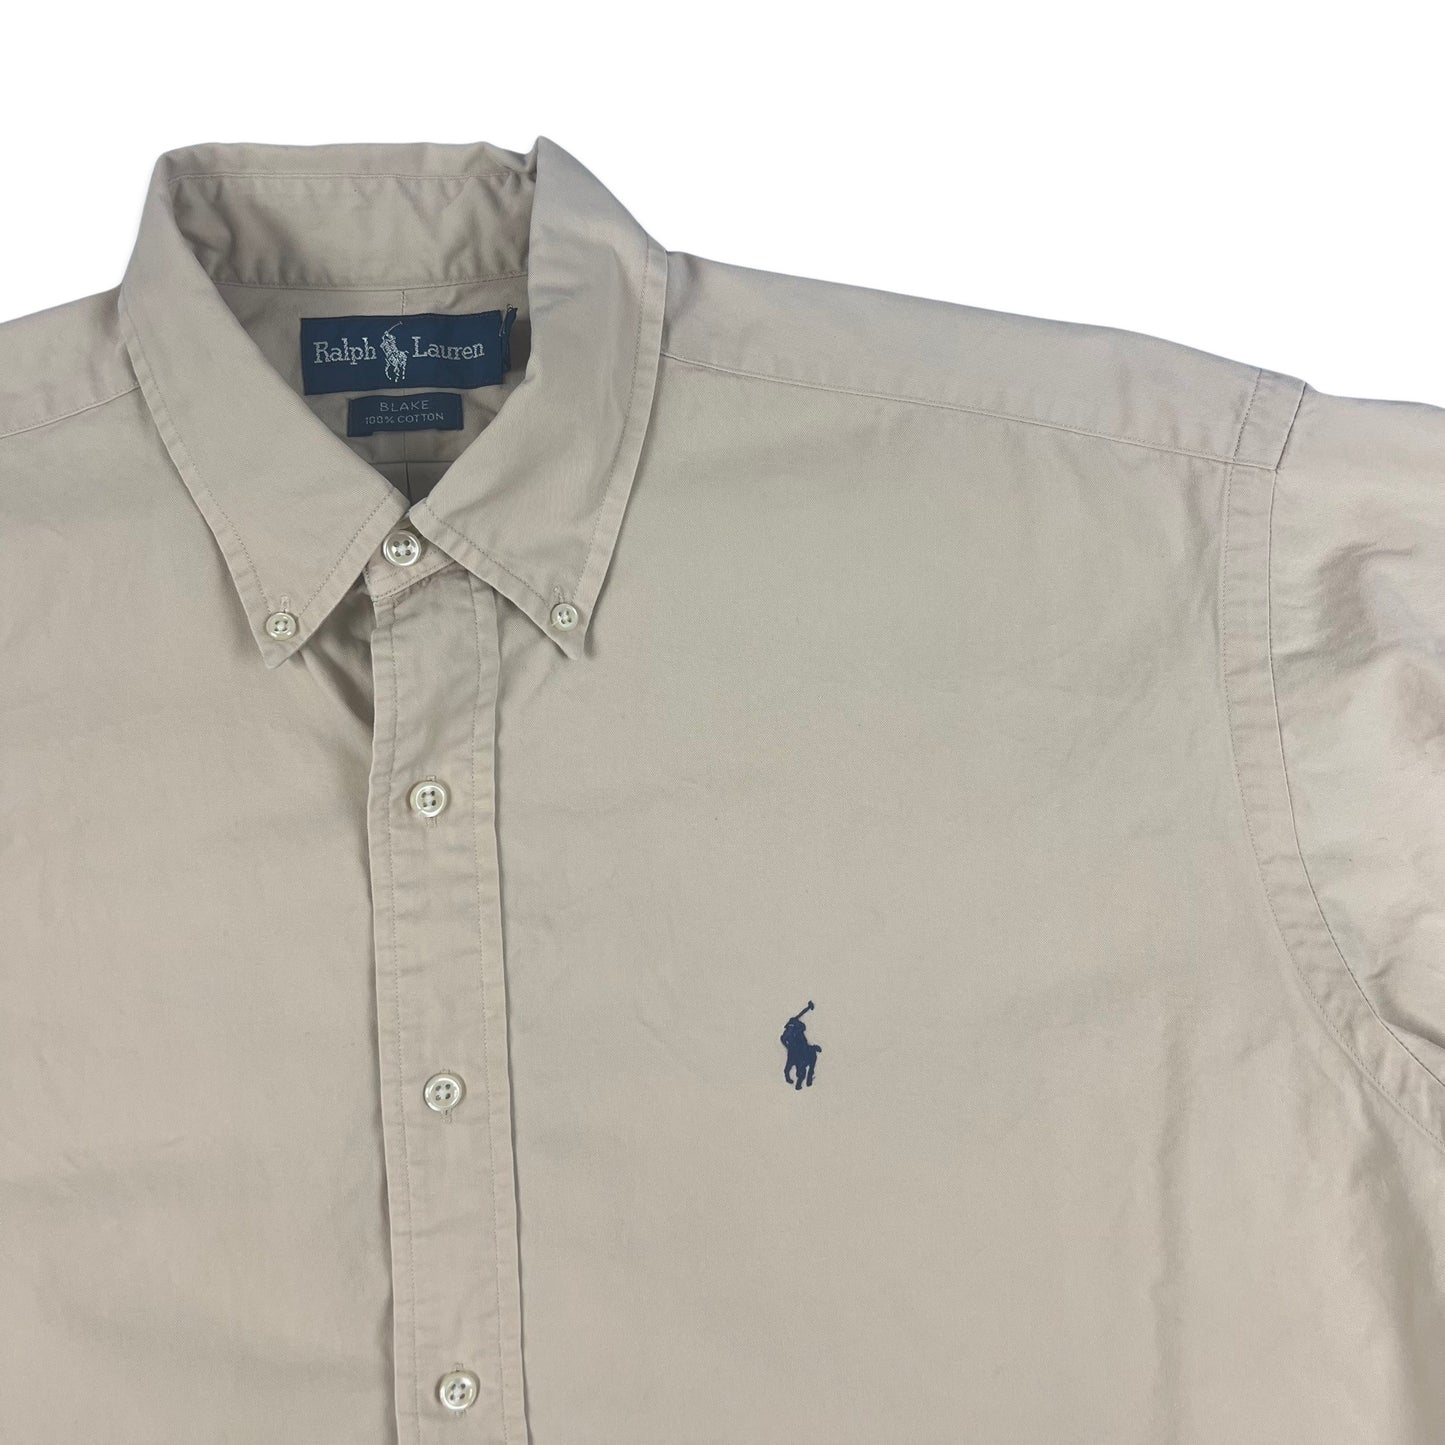 90s 00s Vintage Ralph Lauren Shirt Beige L XL